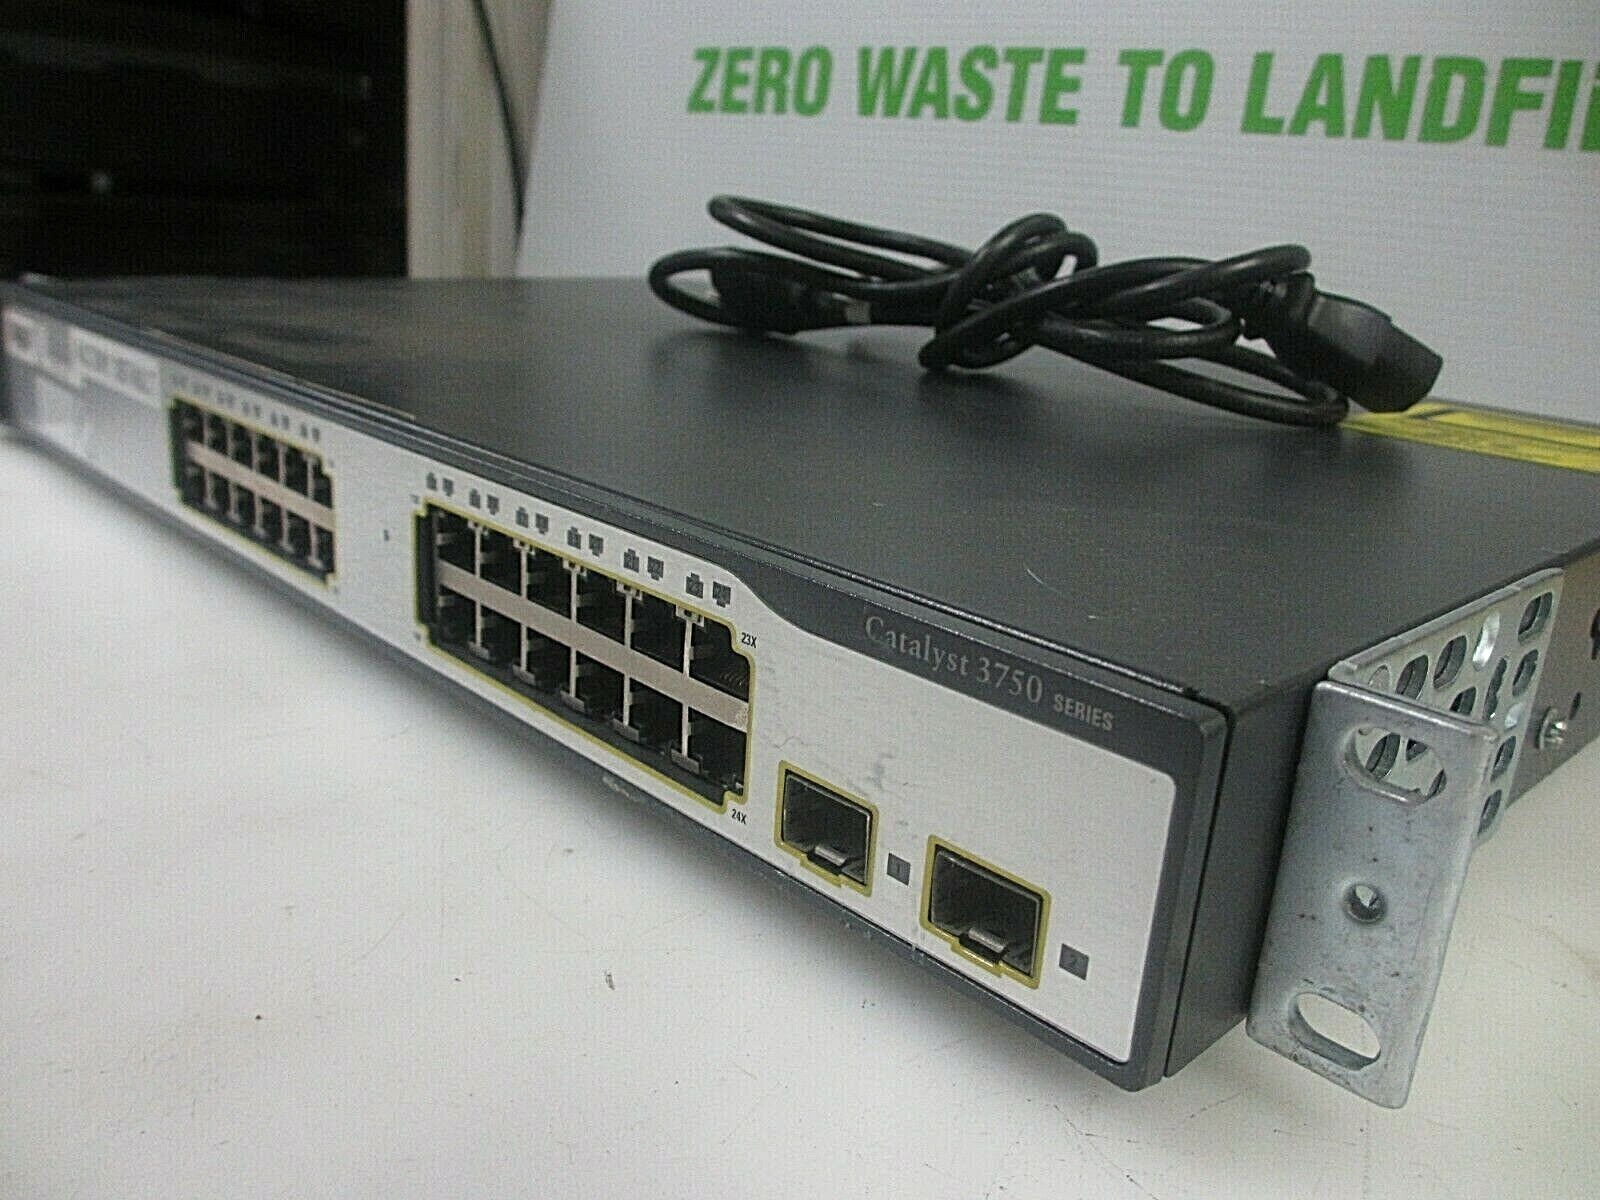 LOT of 4 Cisco Catalyst WS-C3750-24TS-S 24-Port 10/100 Switch w/ Rack Ears 